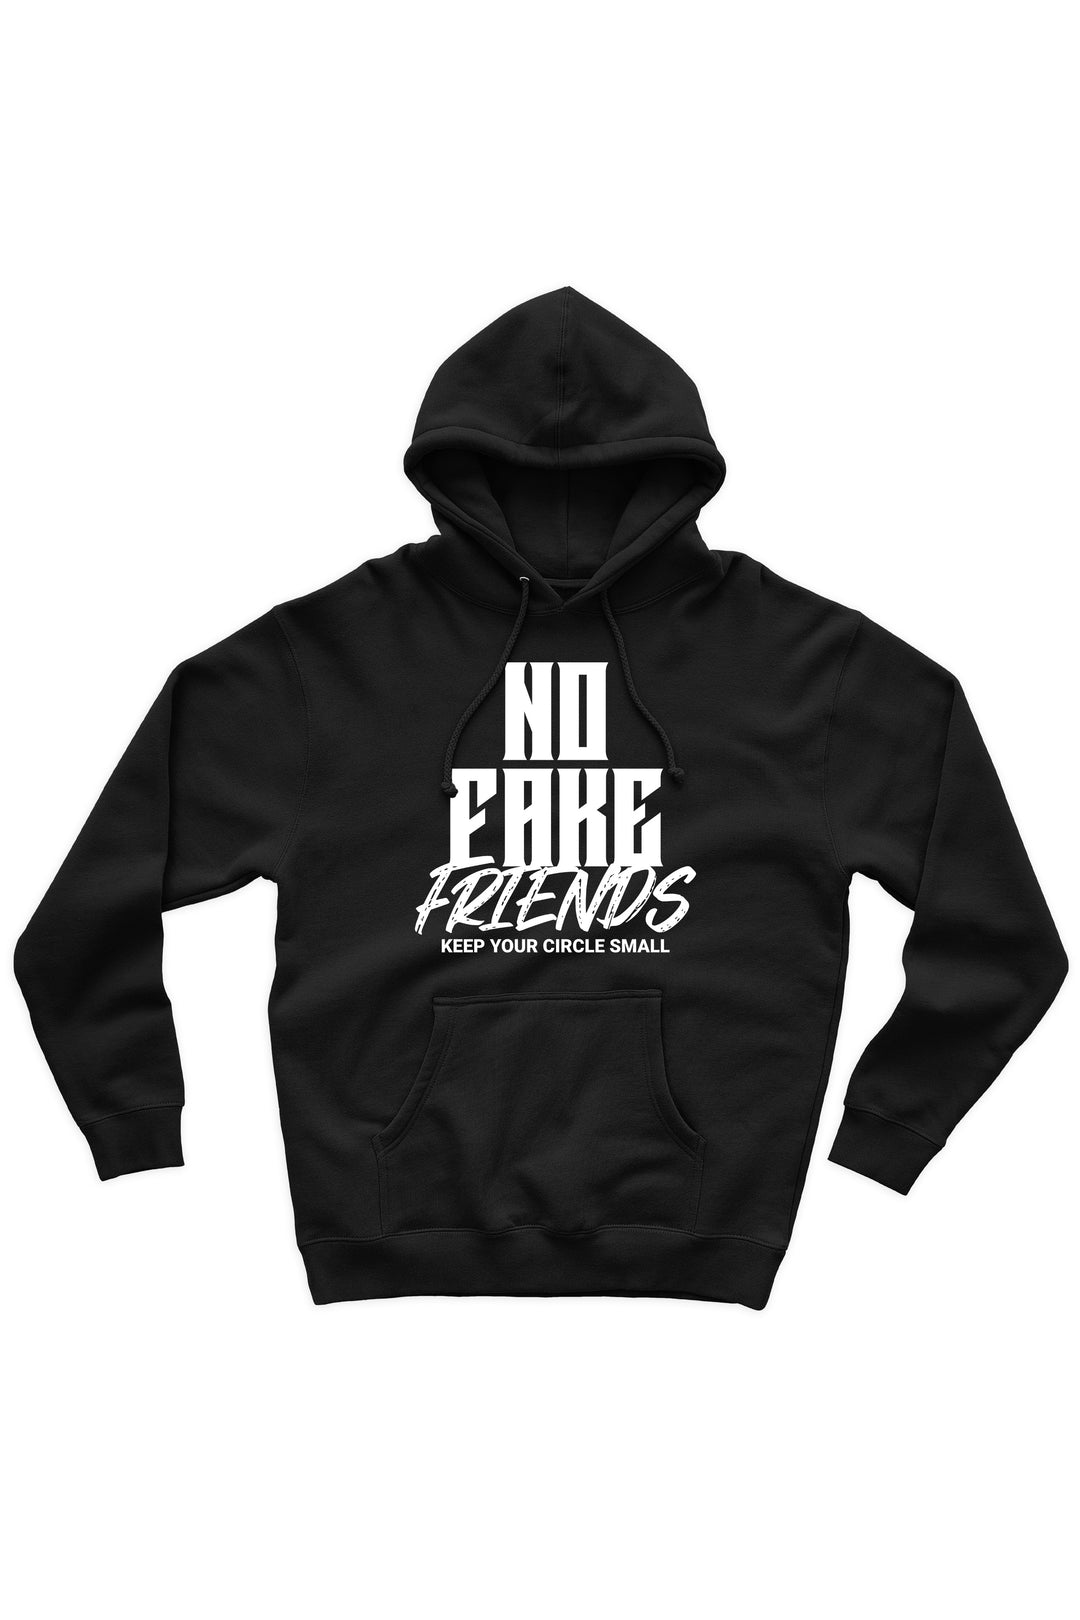 No Fake Friends Hoodie (White Logo) - Zamage